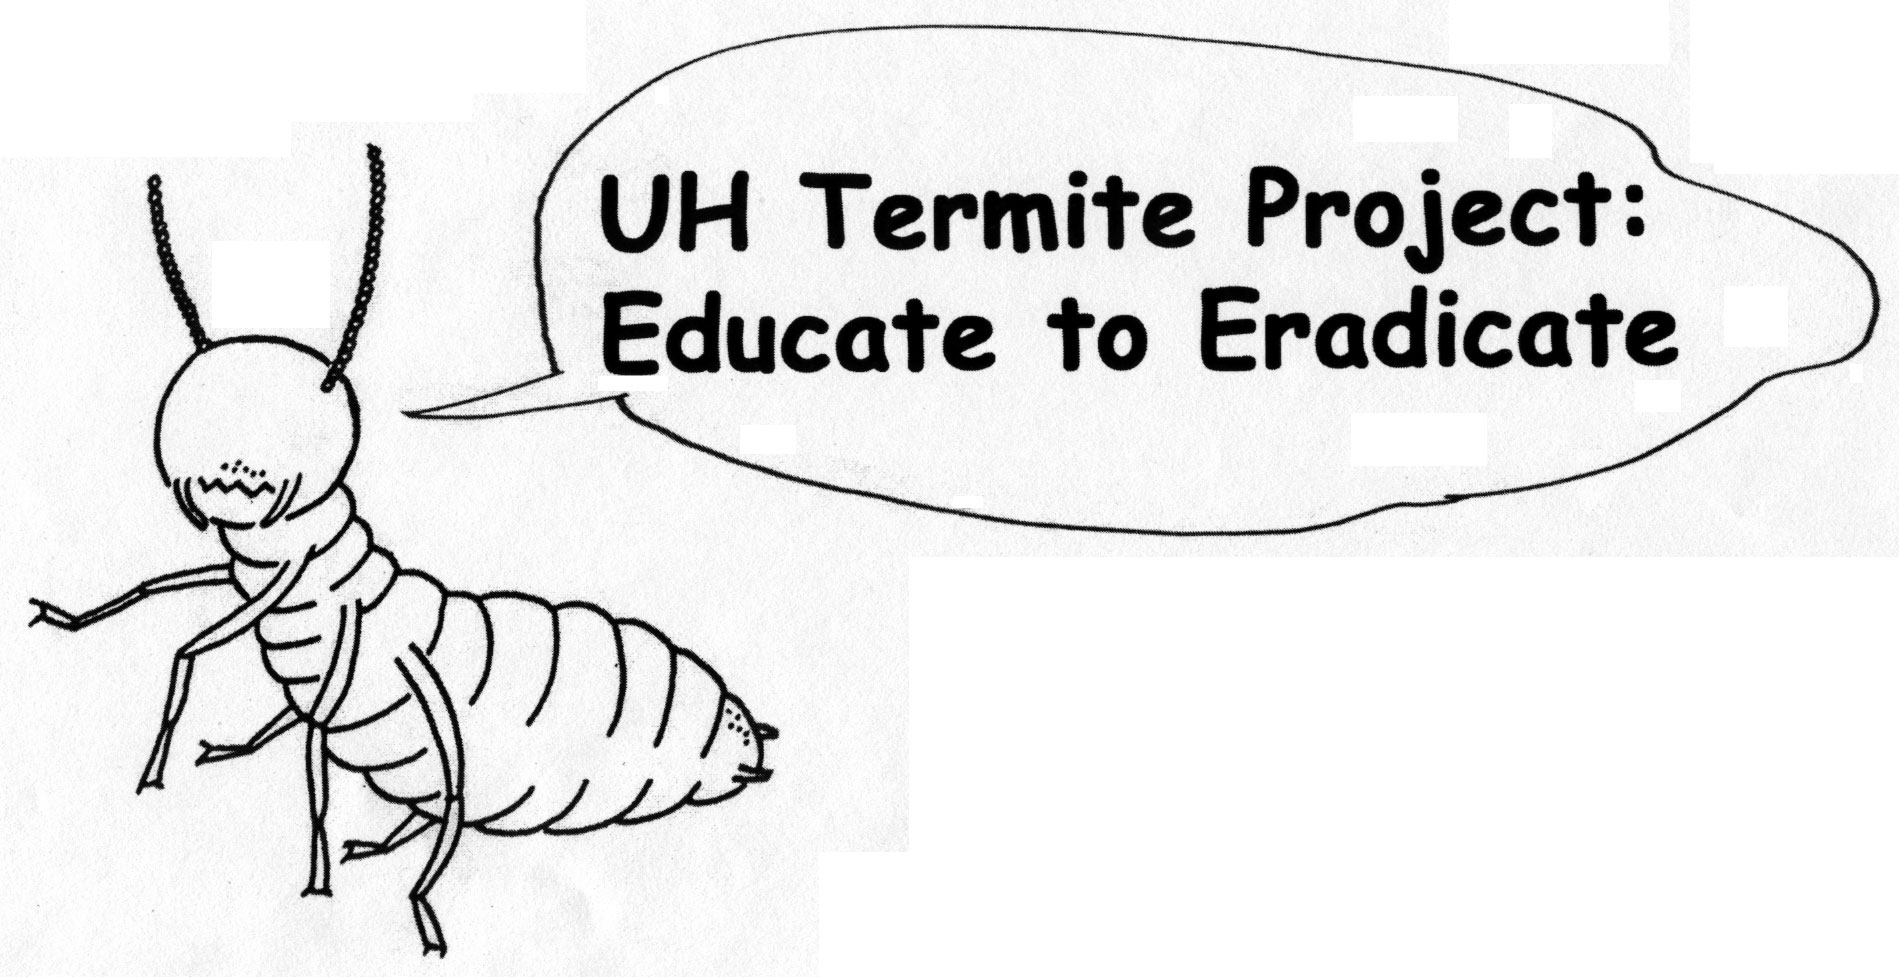 UH Termite Project: Educate to Eradicate